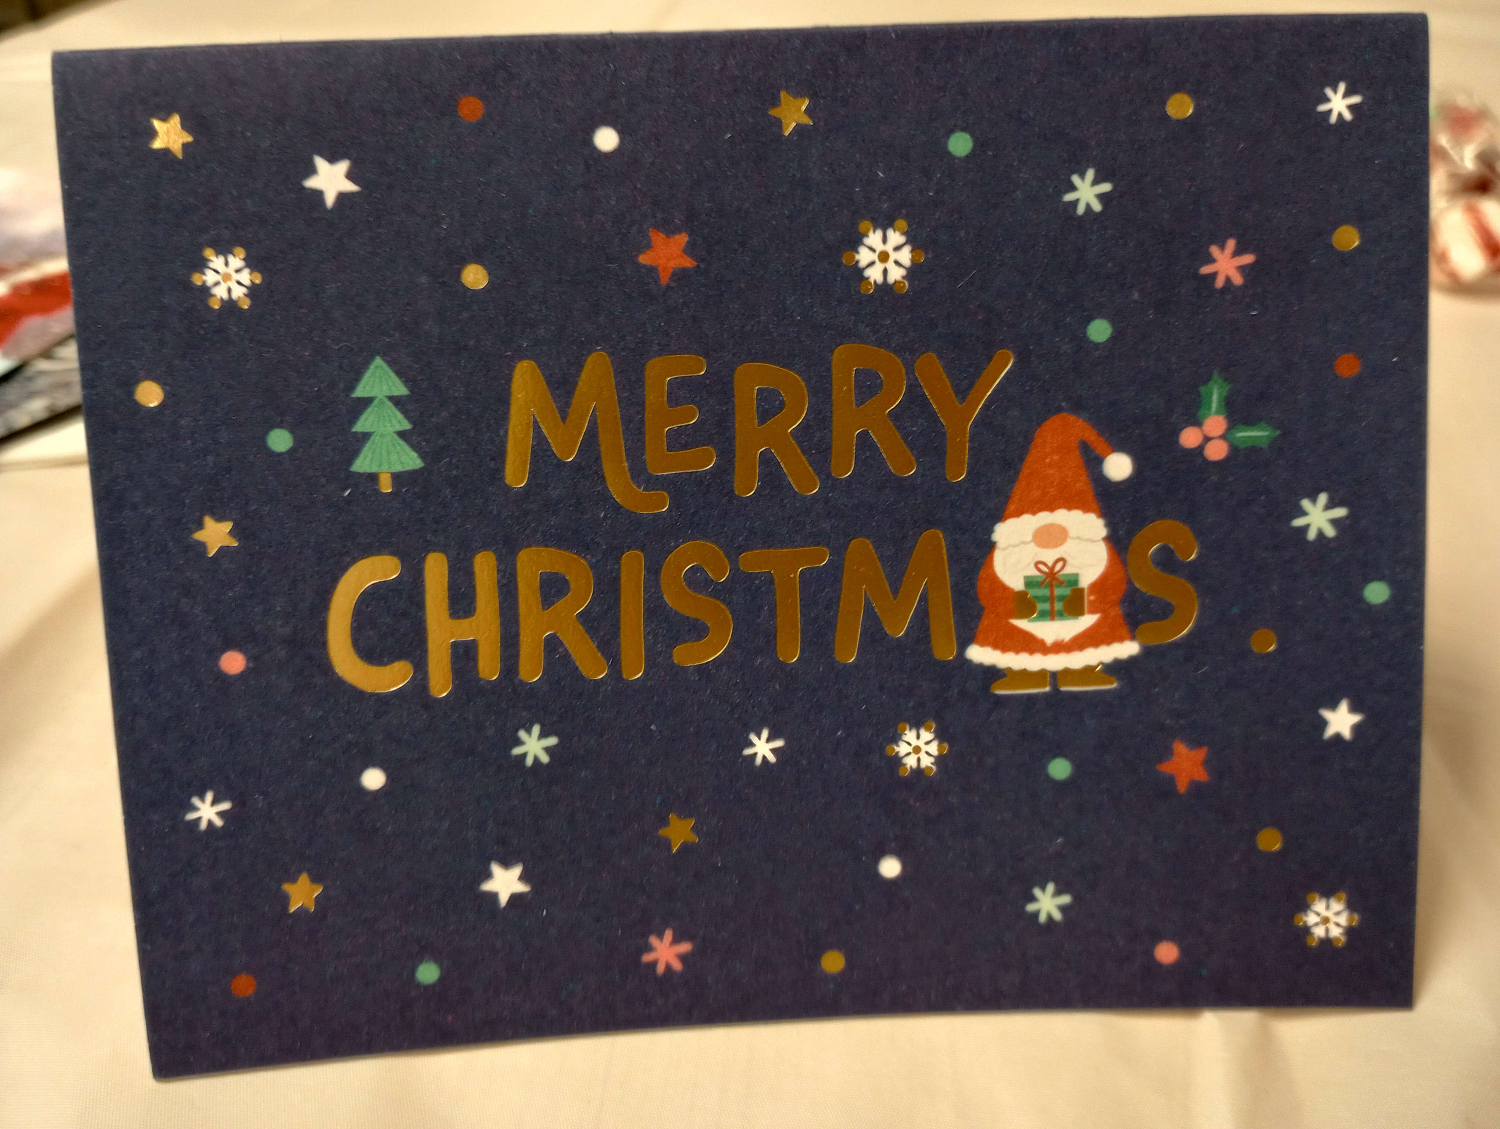 Christmas card featuring a gnomish Santa